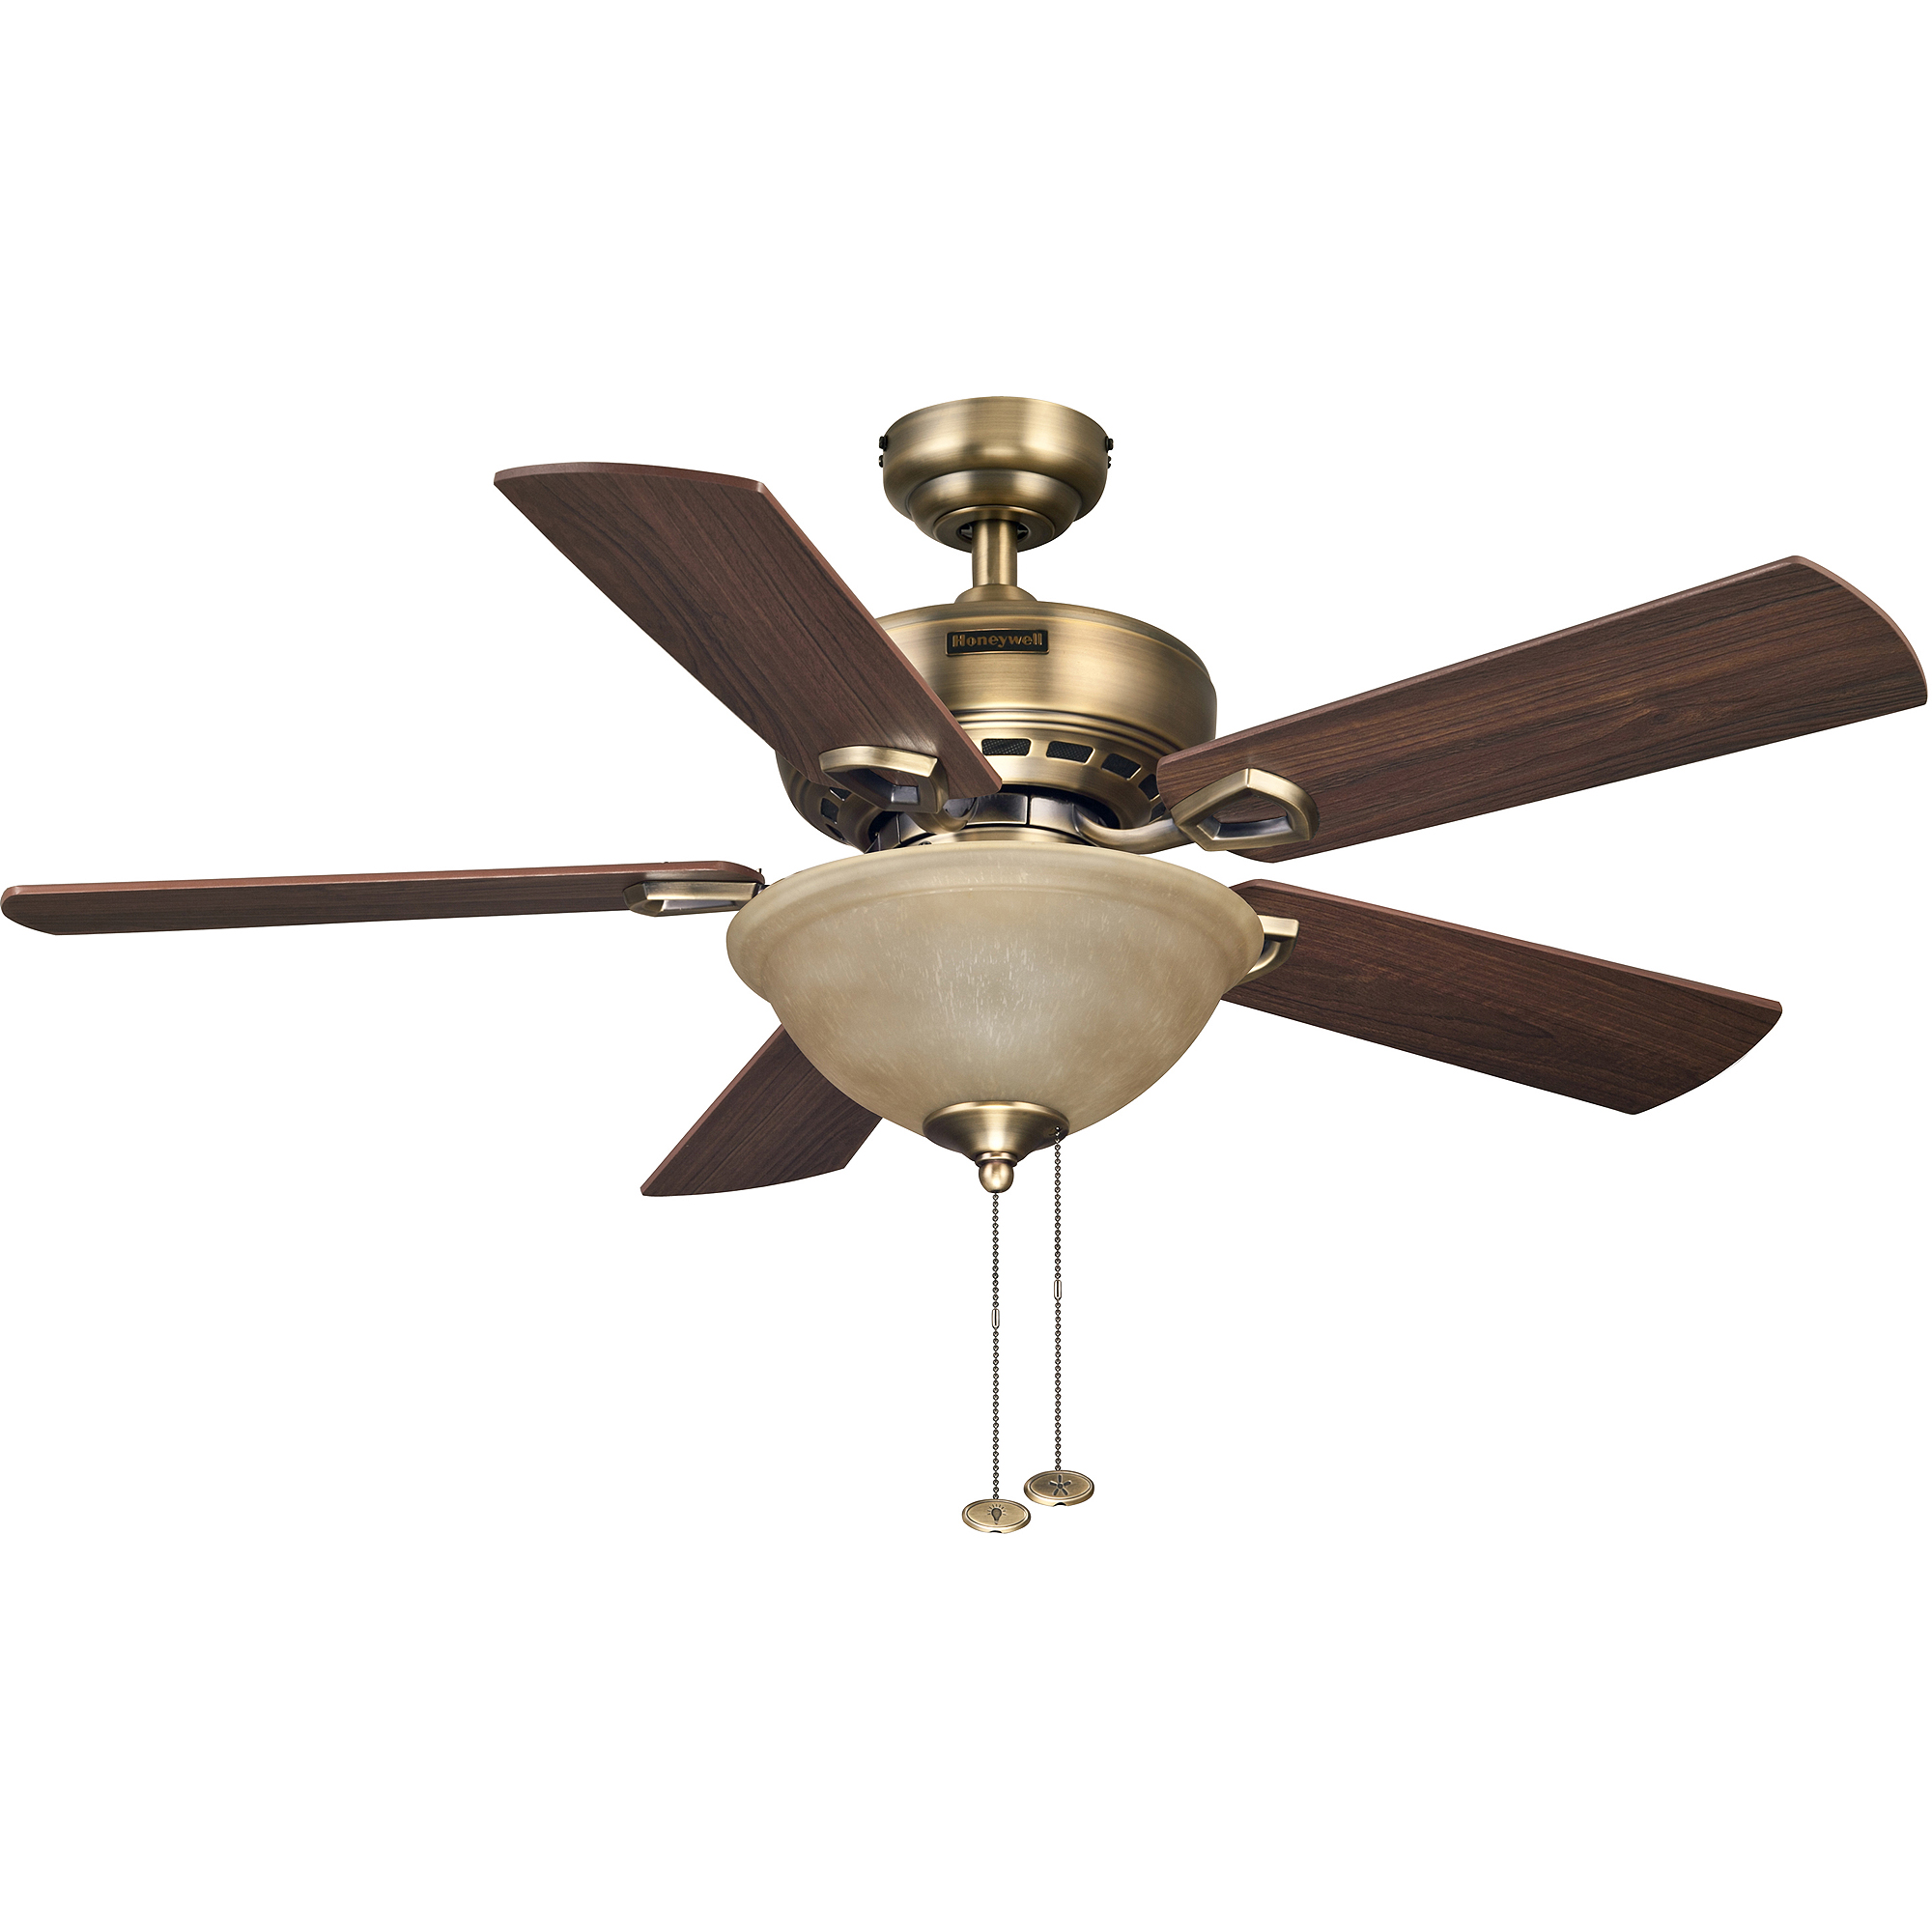 Honeywell 44″ Blaise antique brass ceiling fan for $34